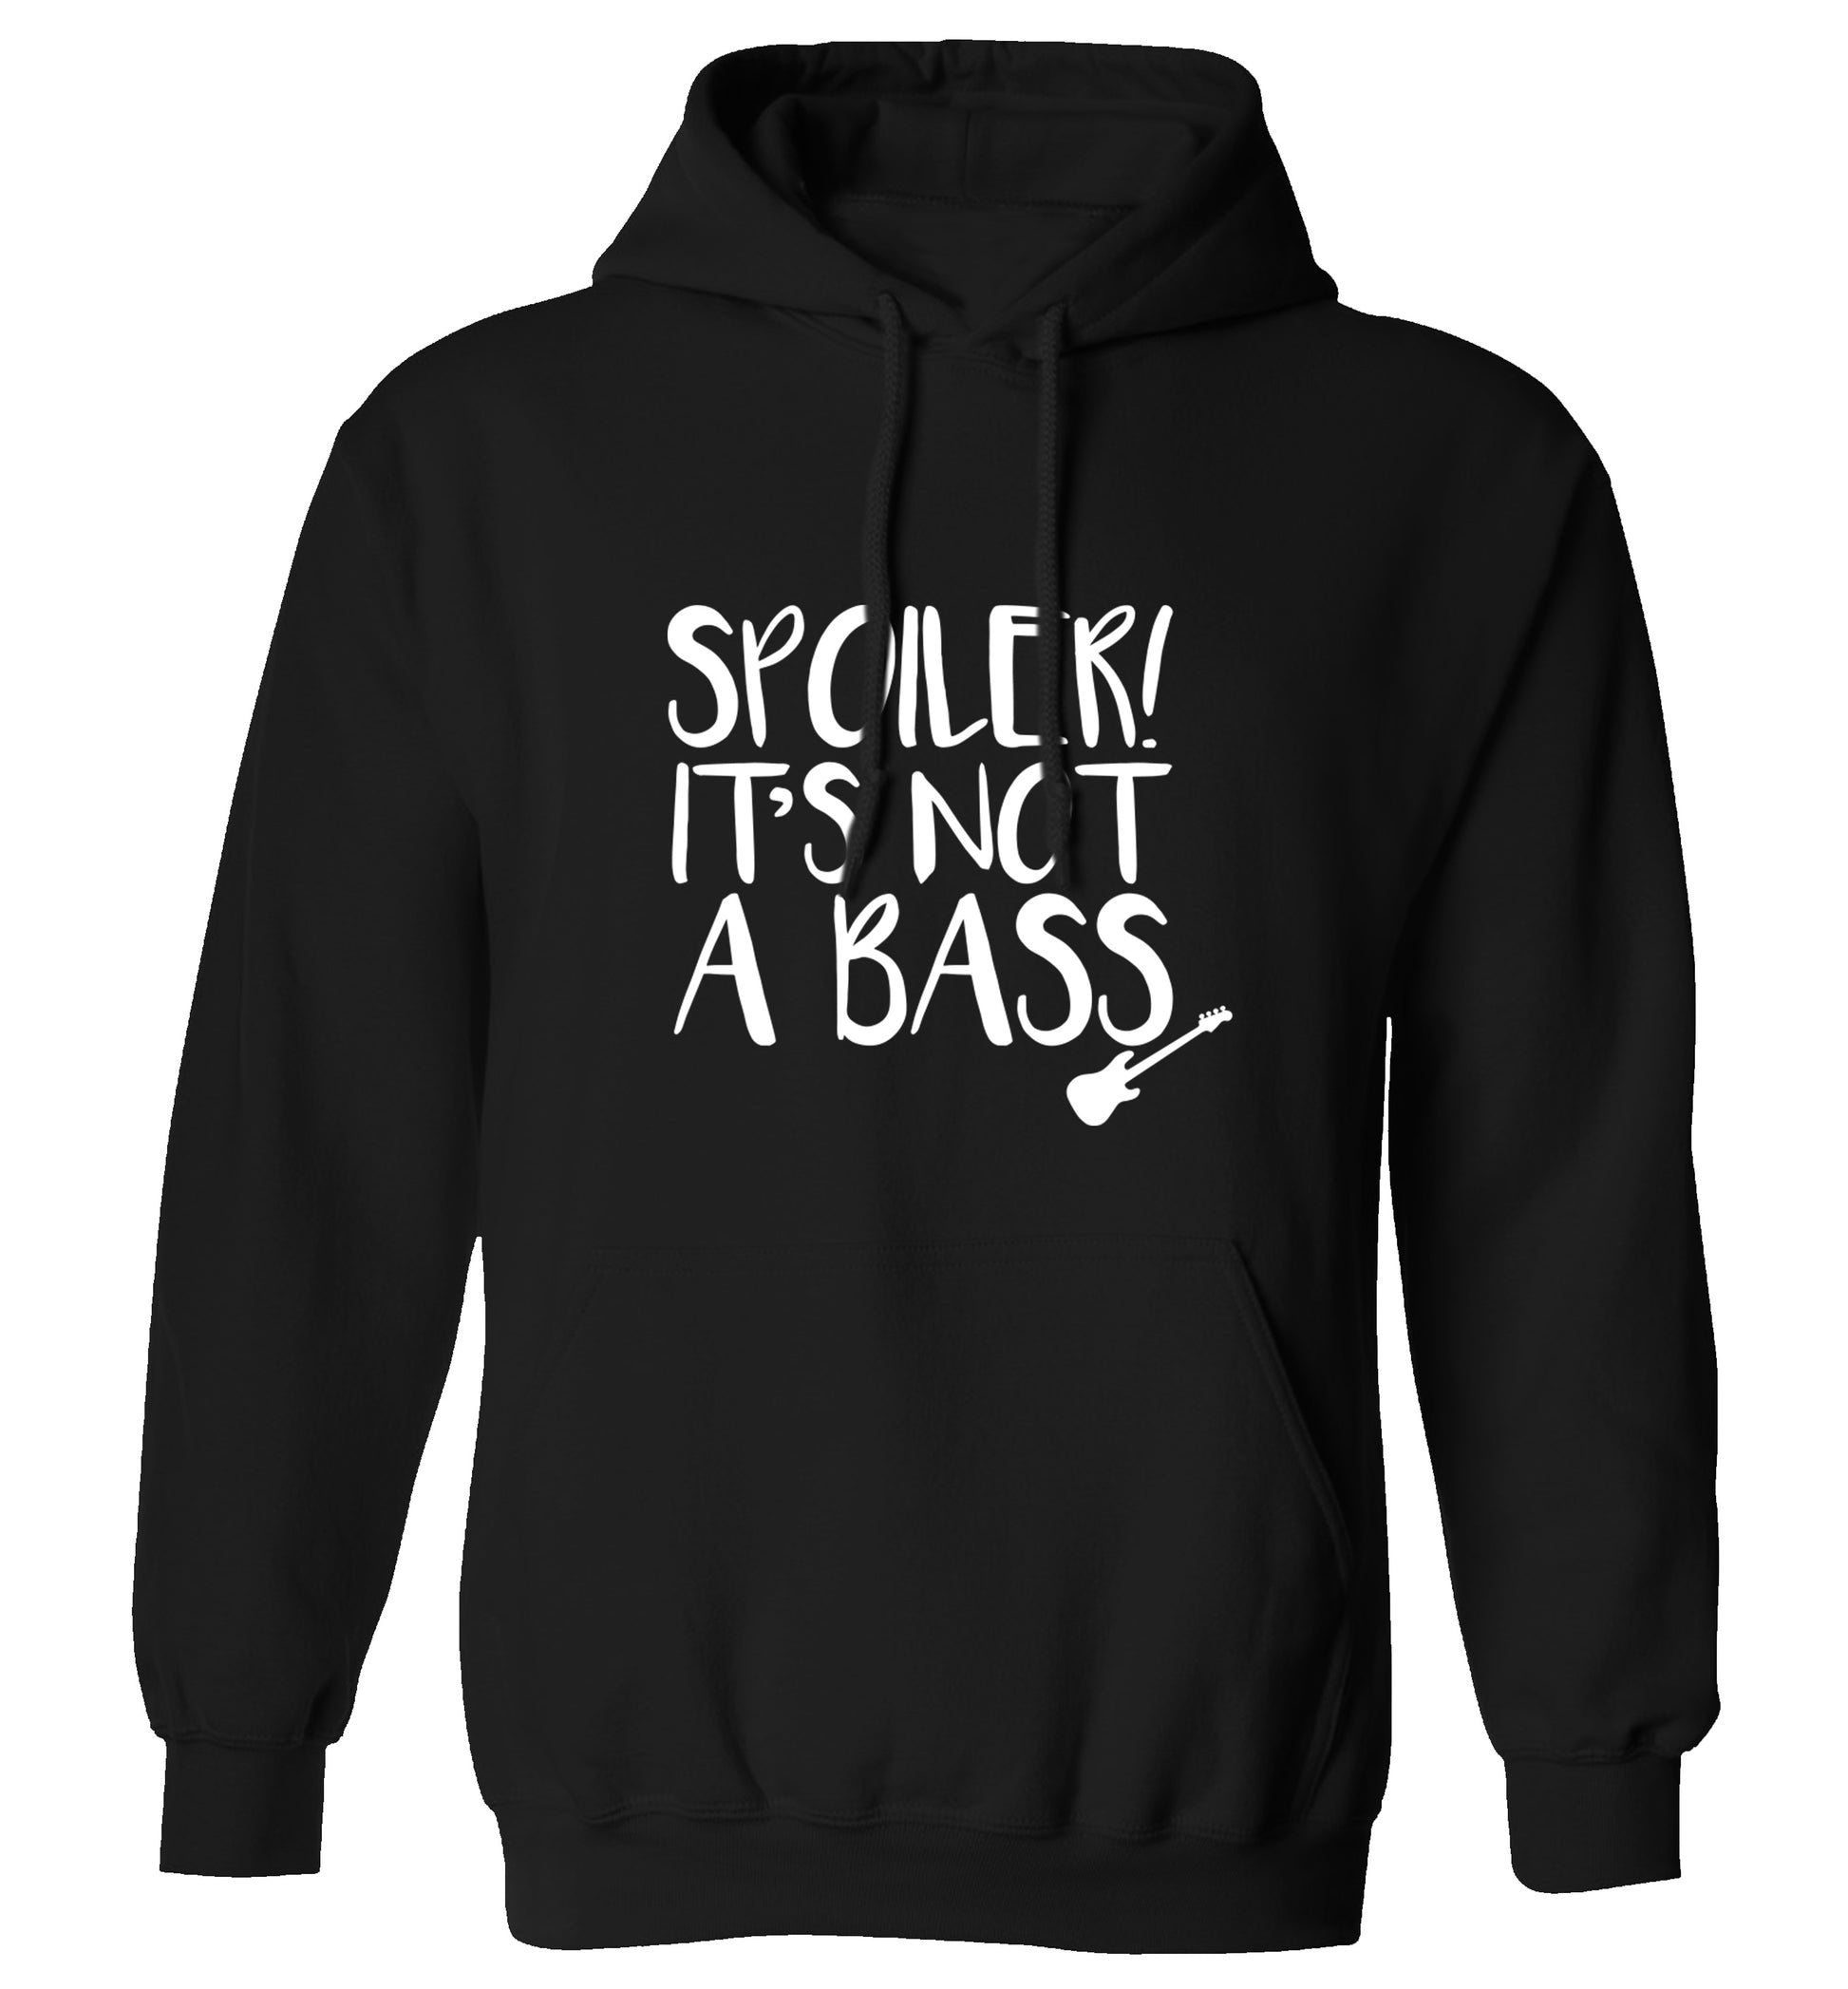 Spoiler it's not a bass adults unisex black hoodie 2XL